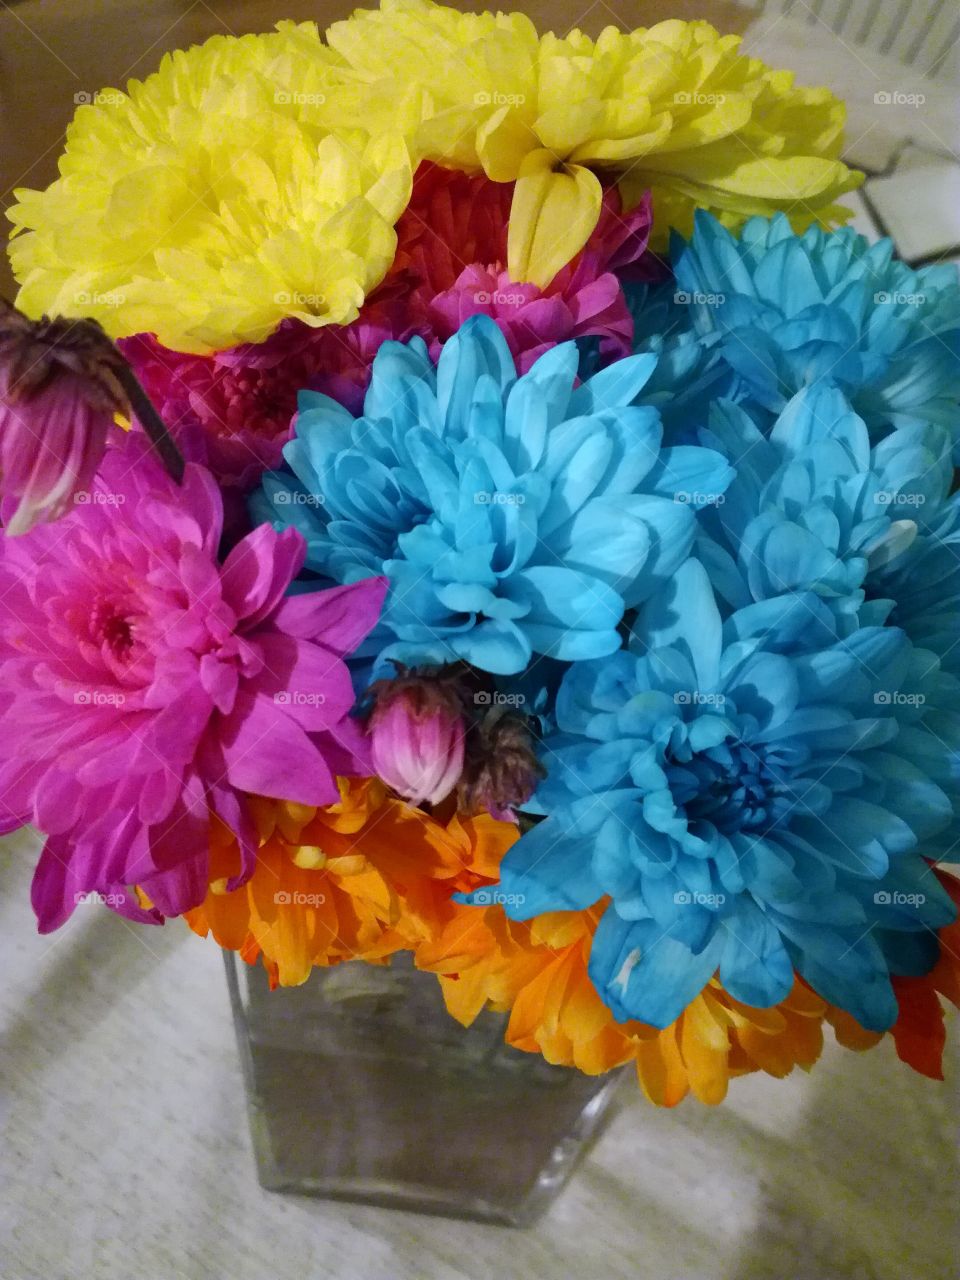 Blue,pink,orange,yellos..flowers are fantastic